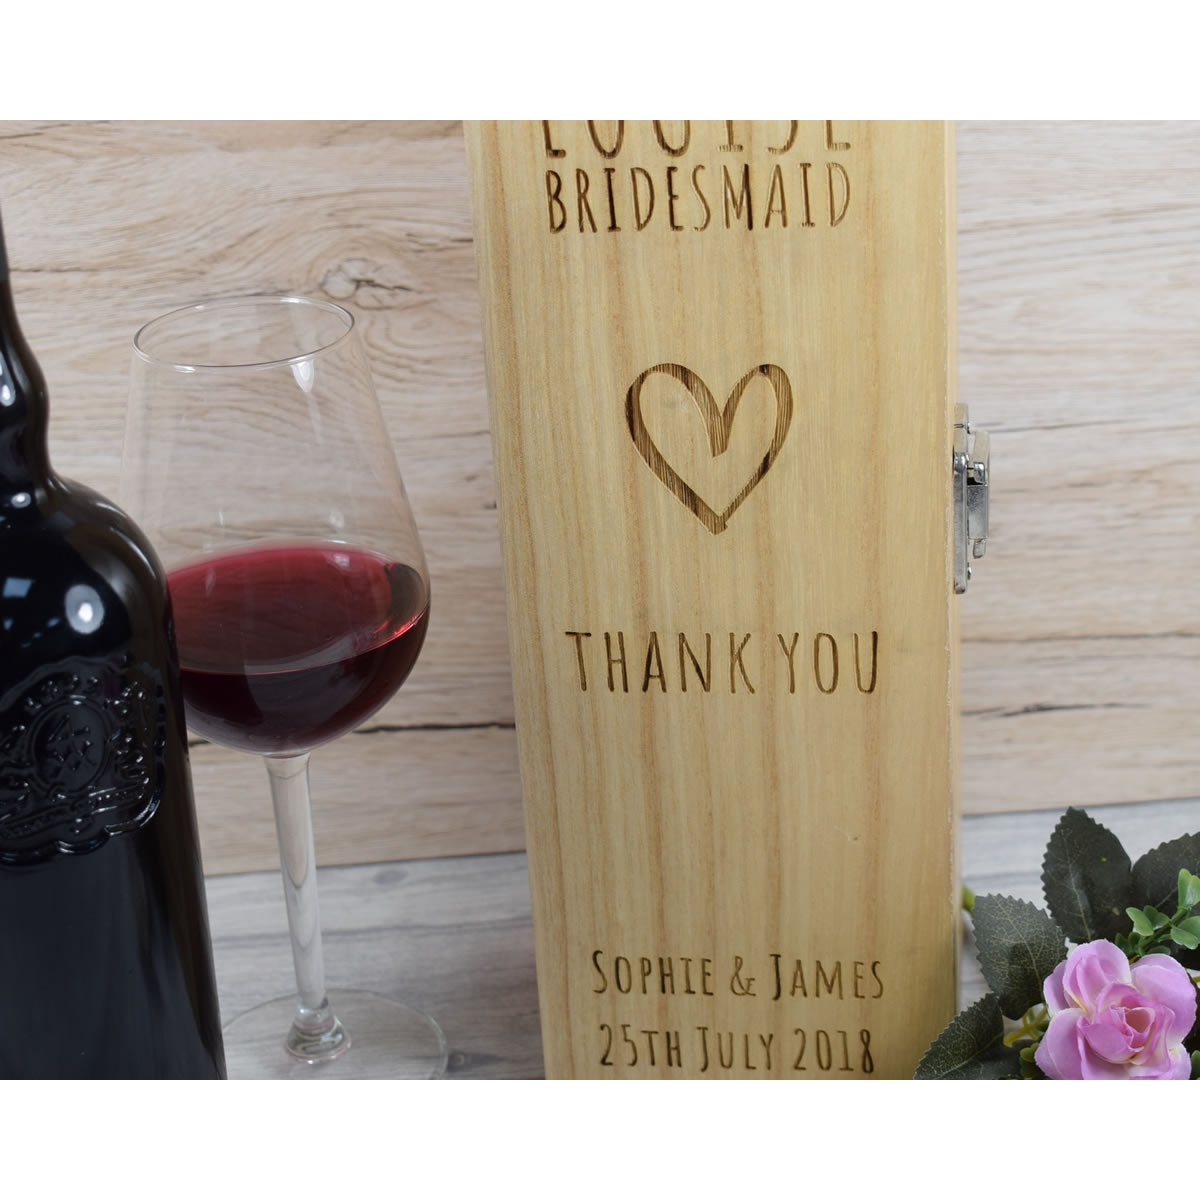 Personalised Wooden Wine Box - Bridesmaid Wedding Gift